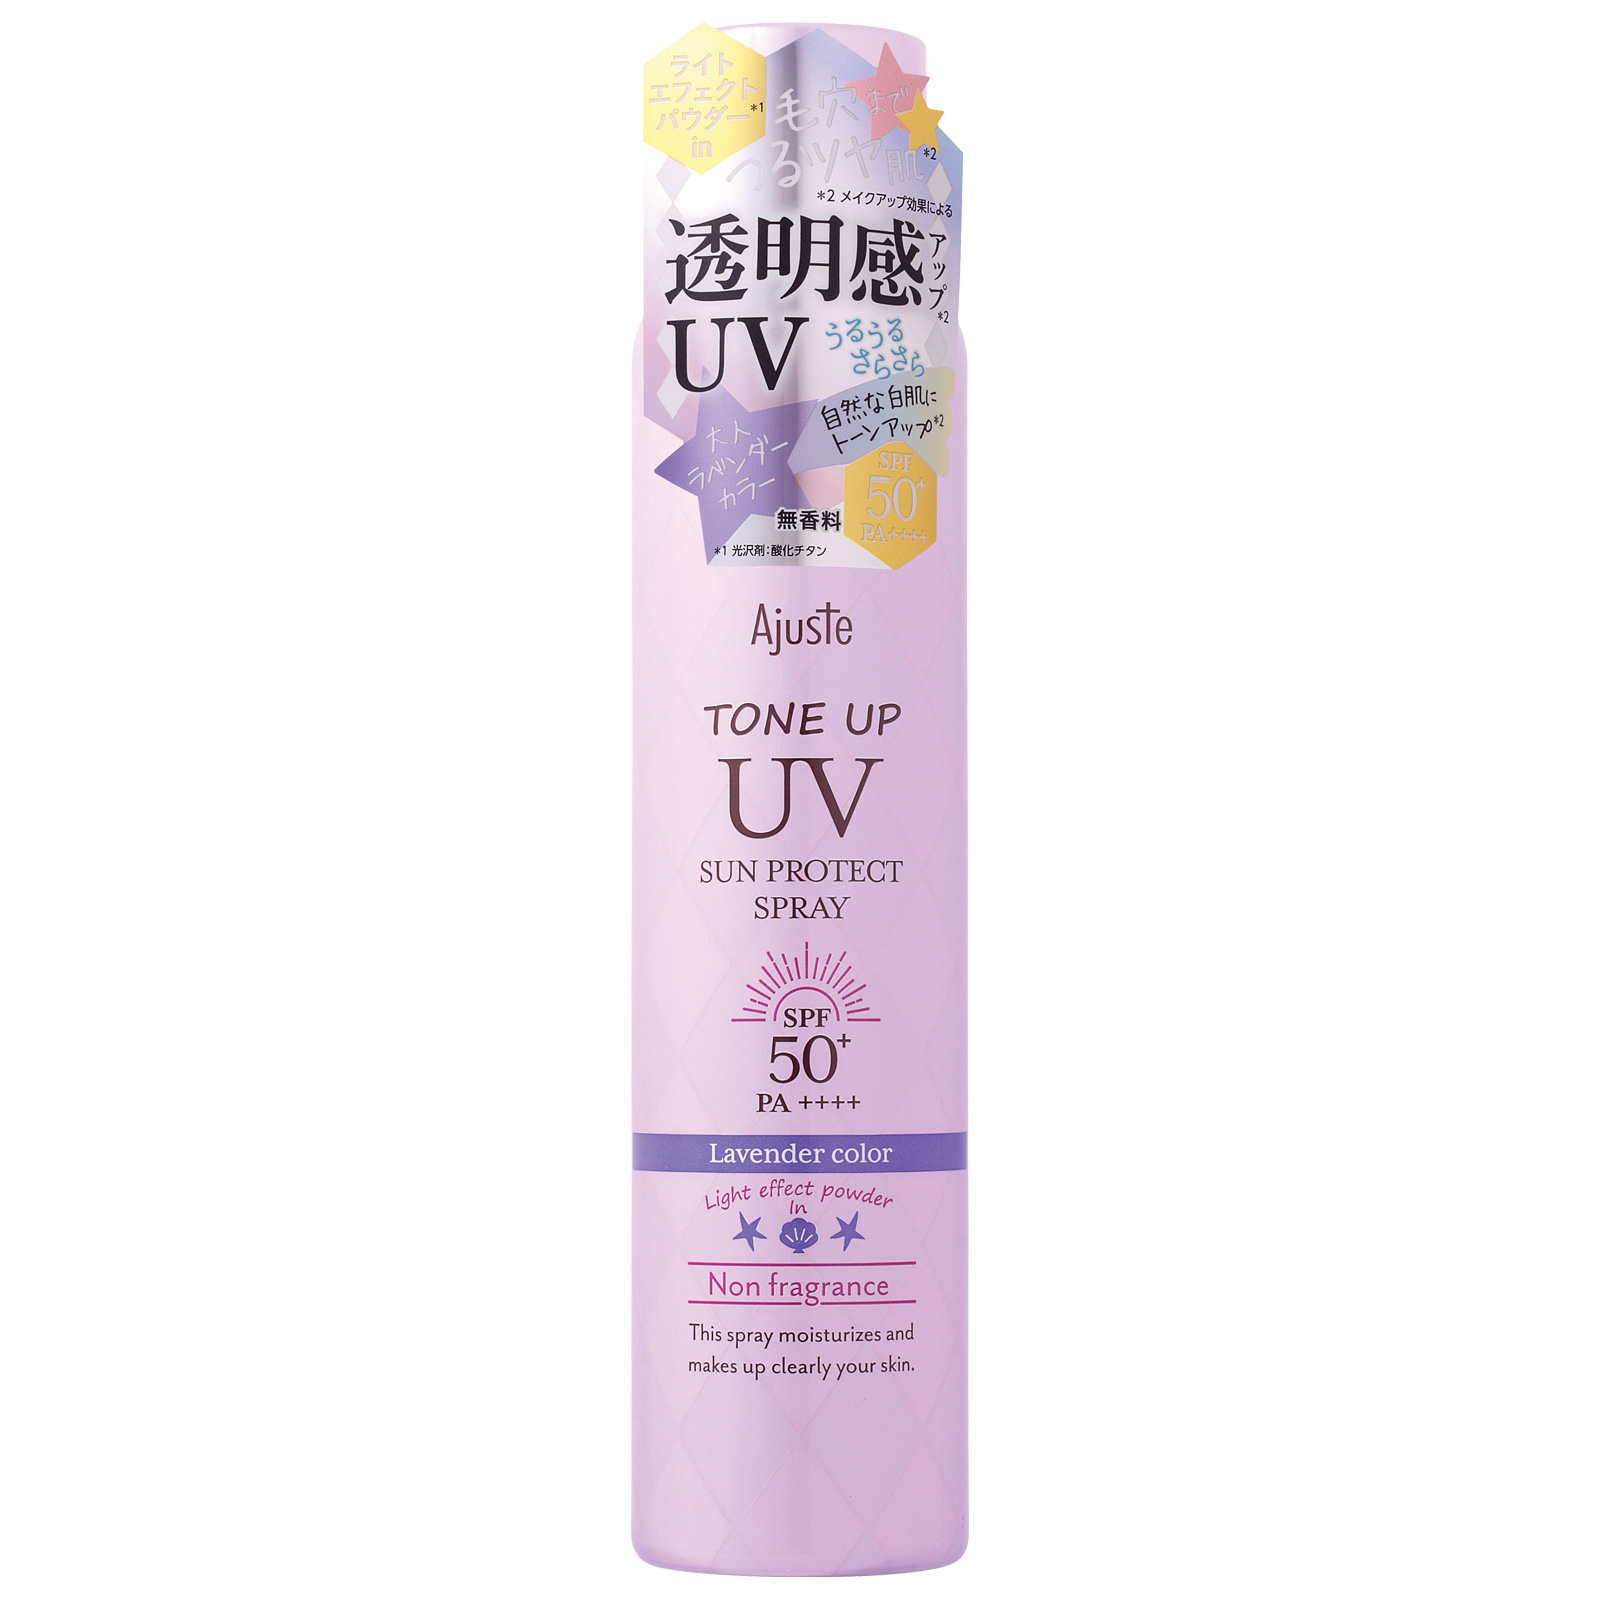 Ajuste Tone Up UV Sun Protect Spray Lavender Color SPF 50+ PA++++. Солнцезащитный спрей Адьюсте Тон Ап, 100 г (160 мл)